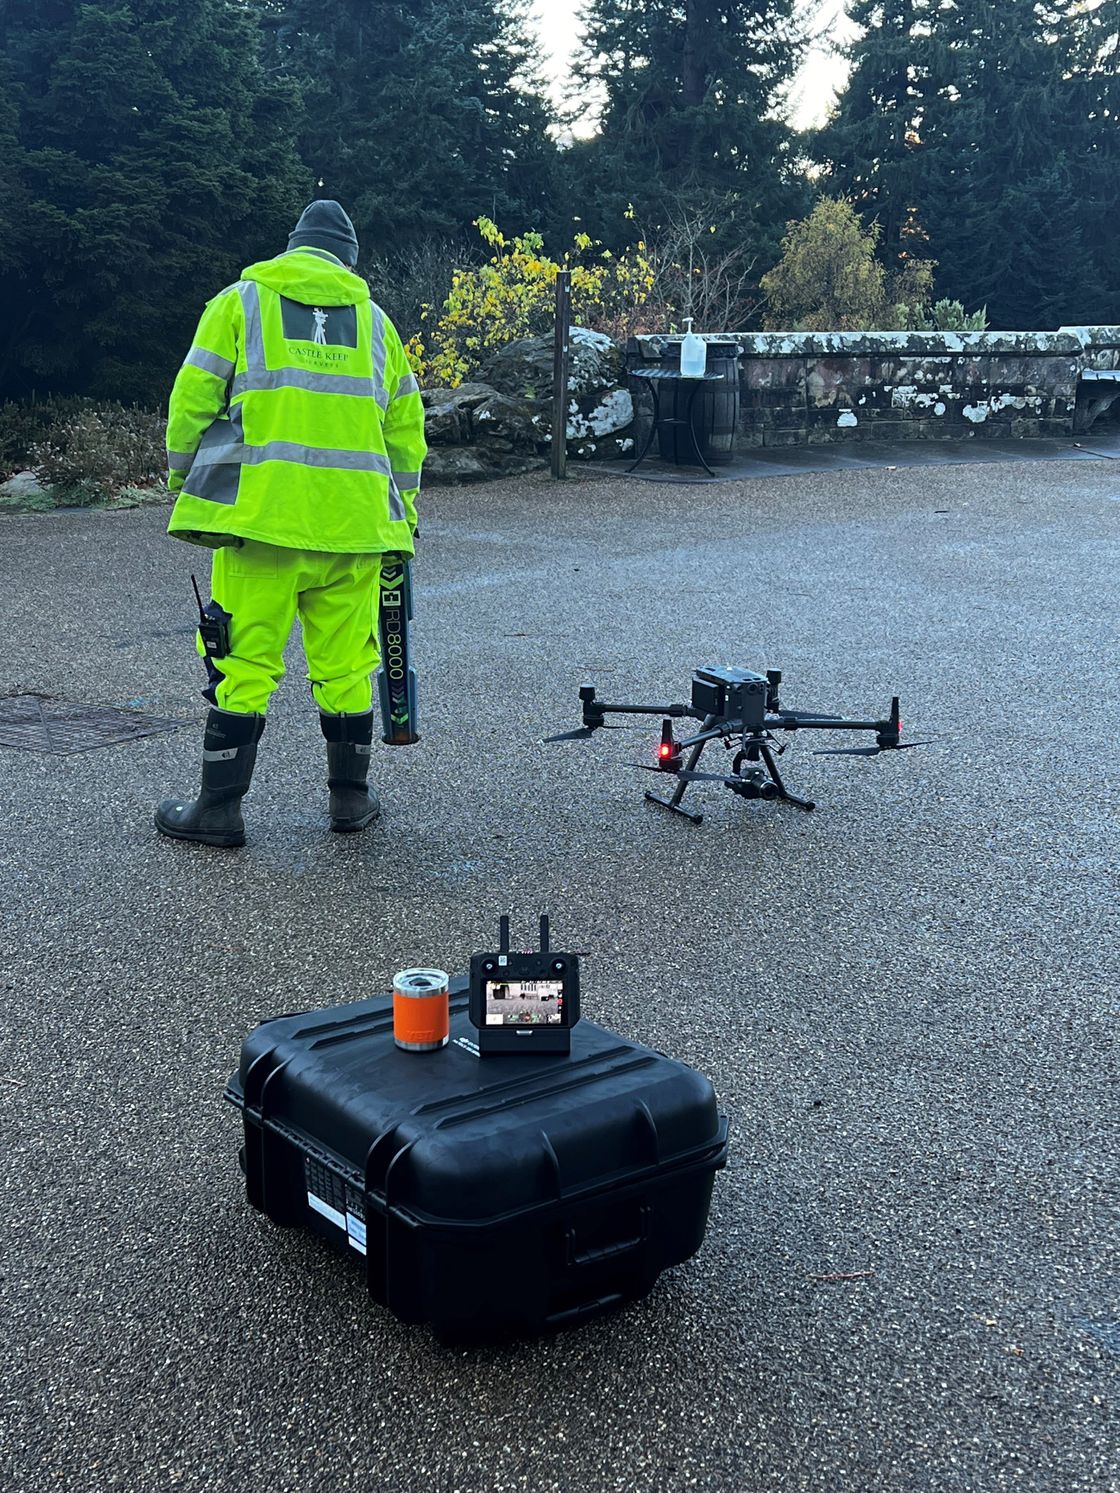 Surveying drone